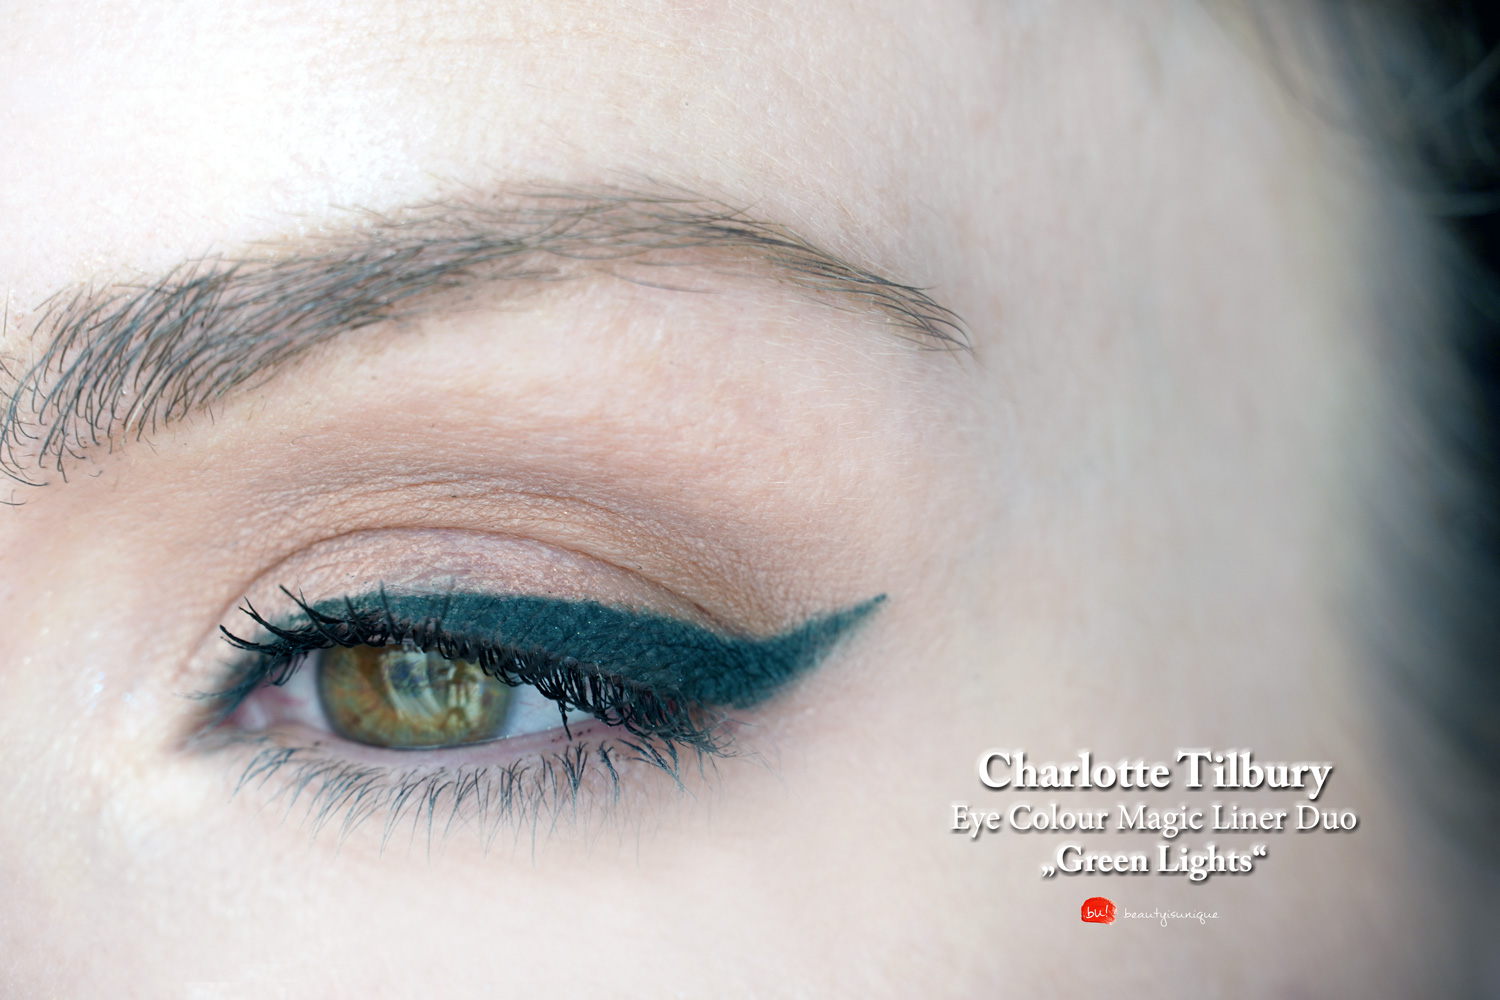 Charlotte-tilbury-green-lights-eye-colour-magic-liner-duo